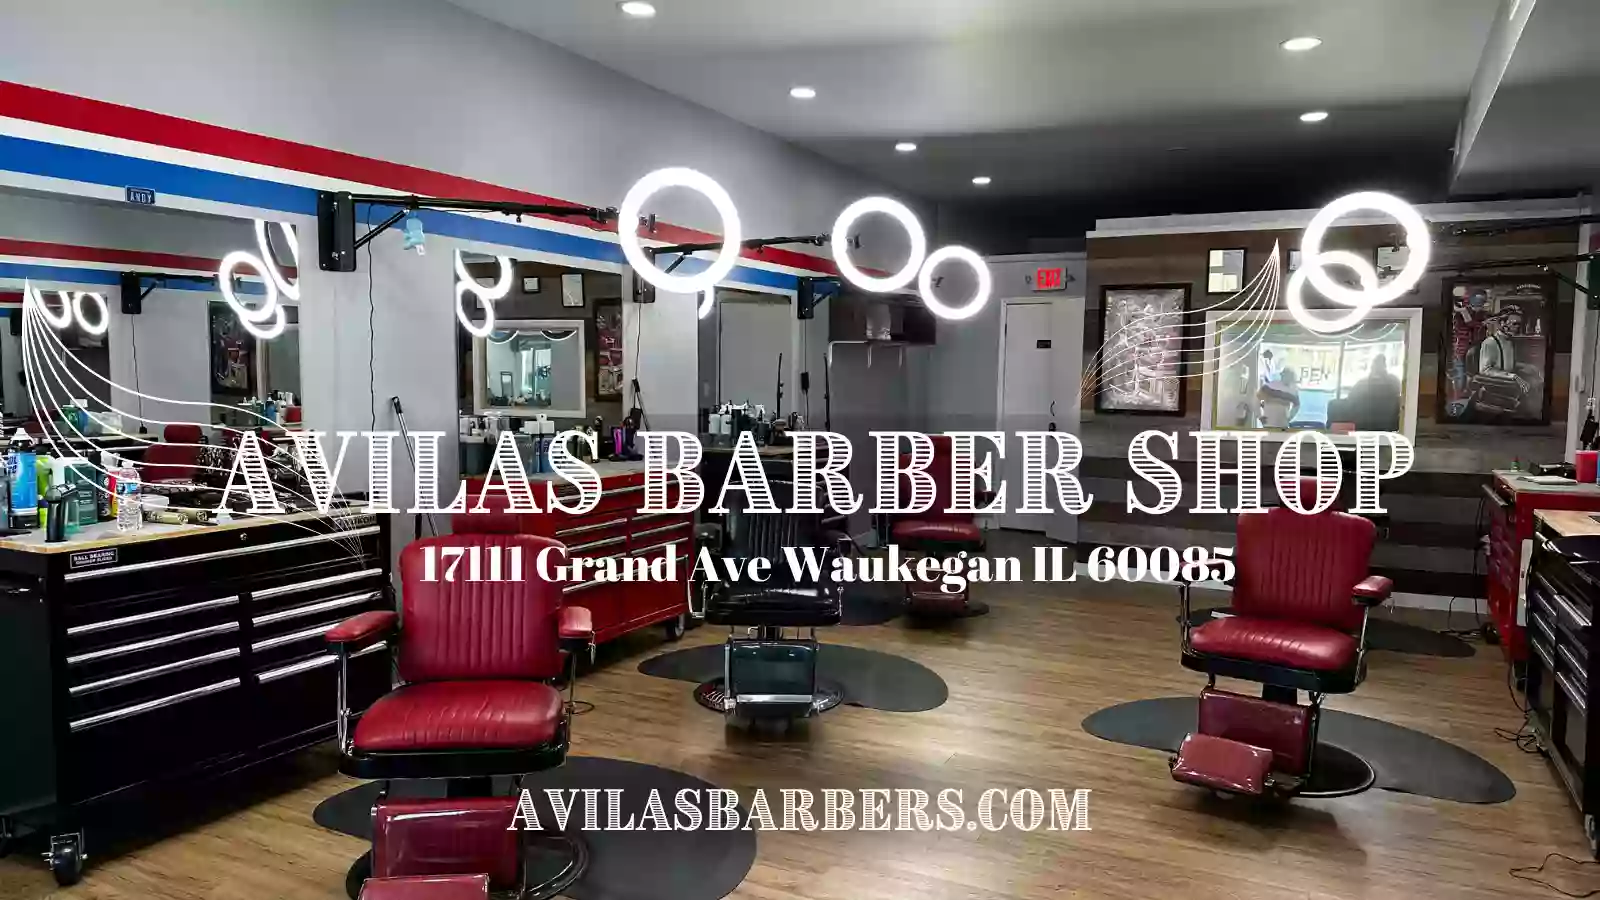 Avila’s Barbershop